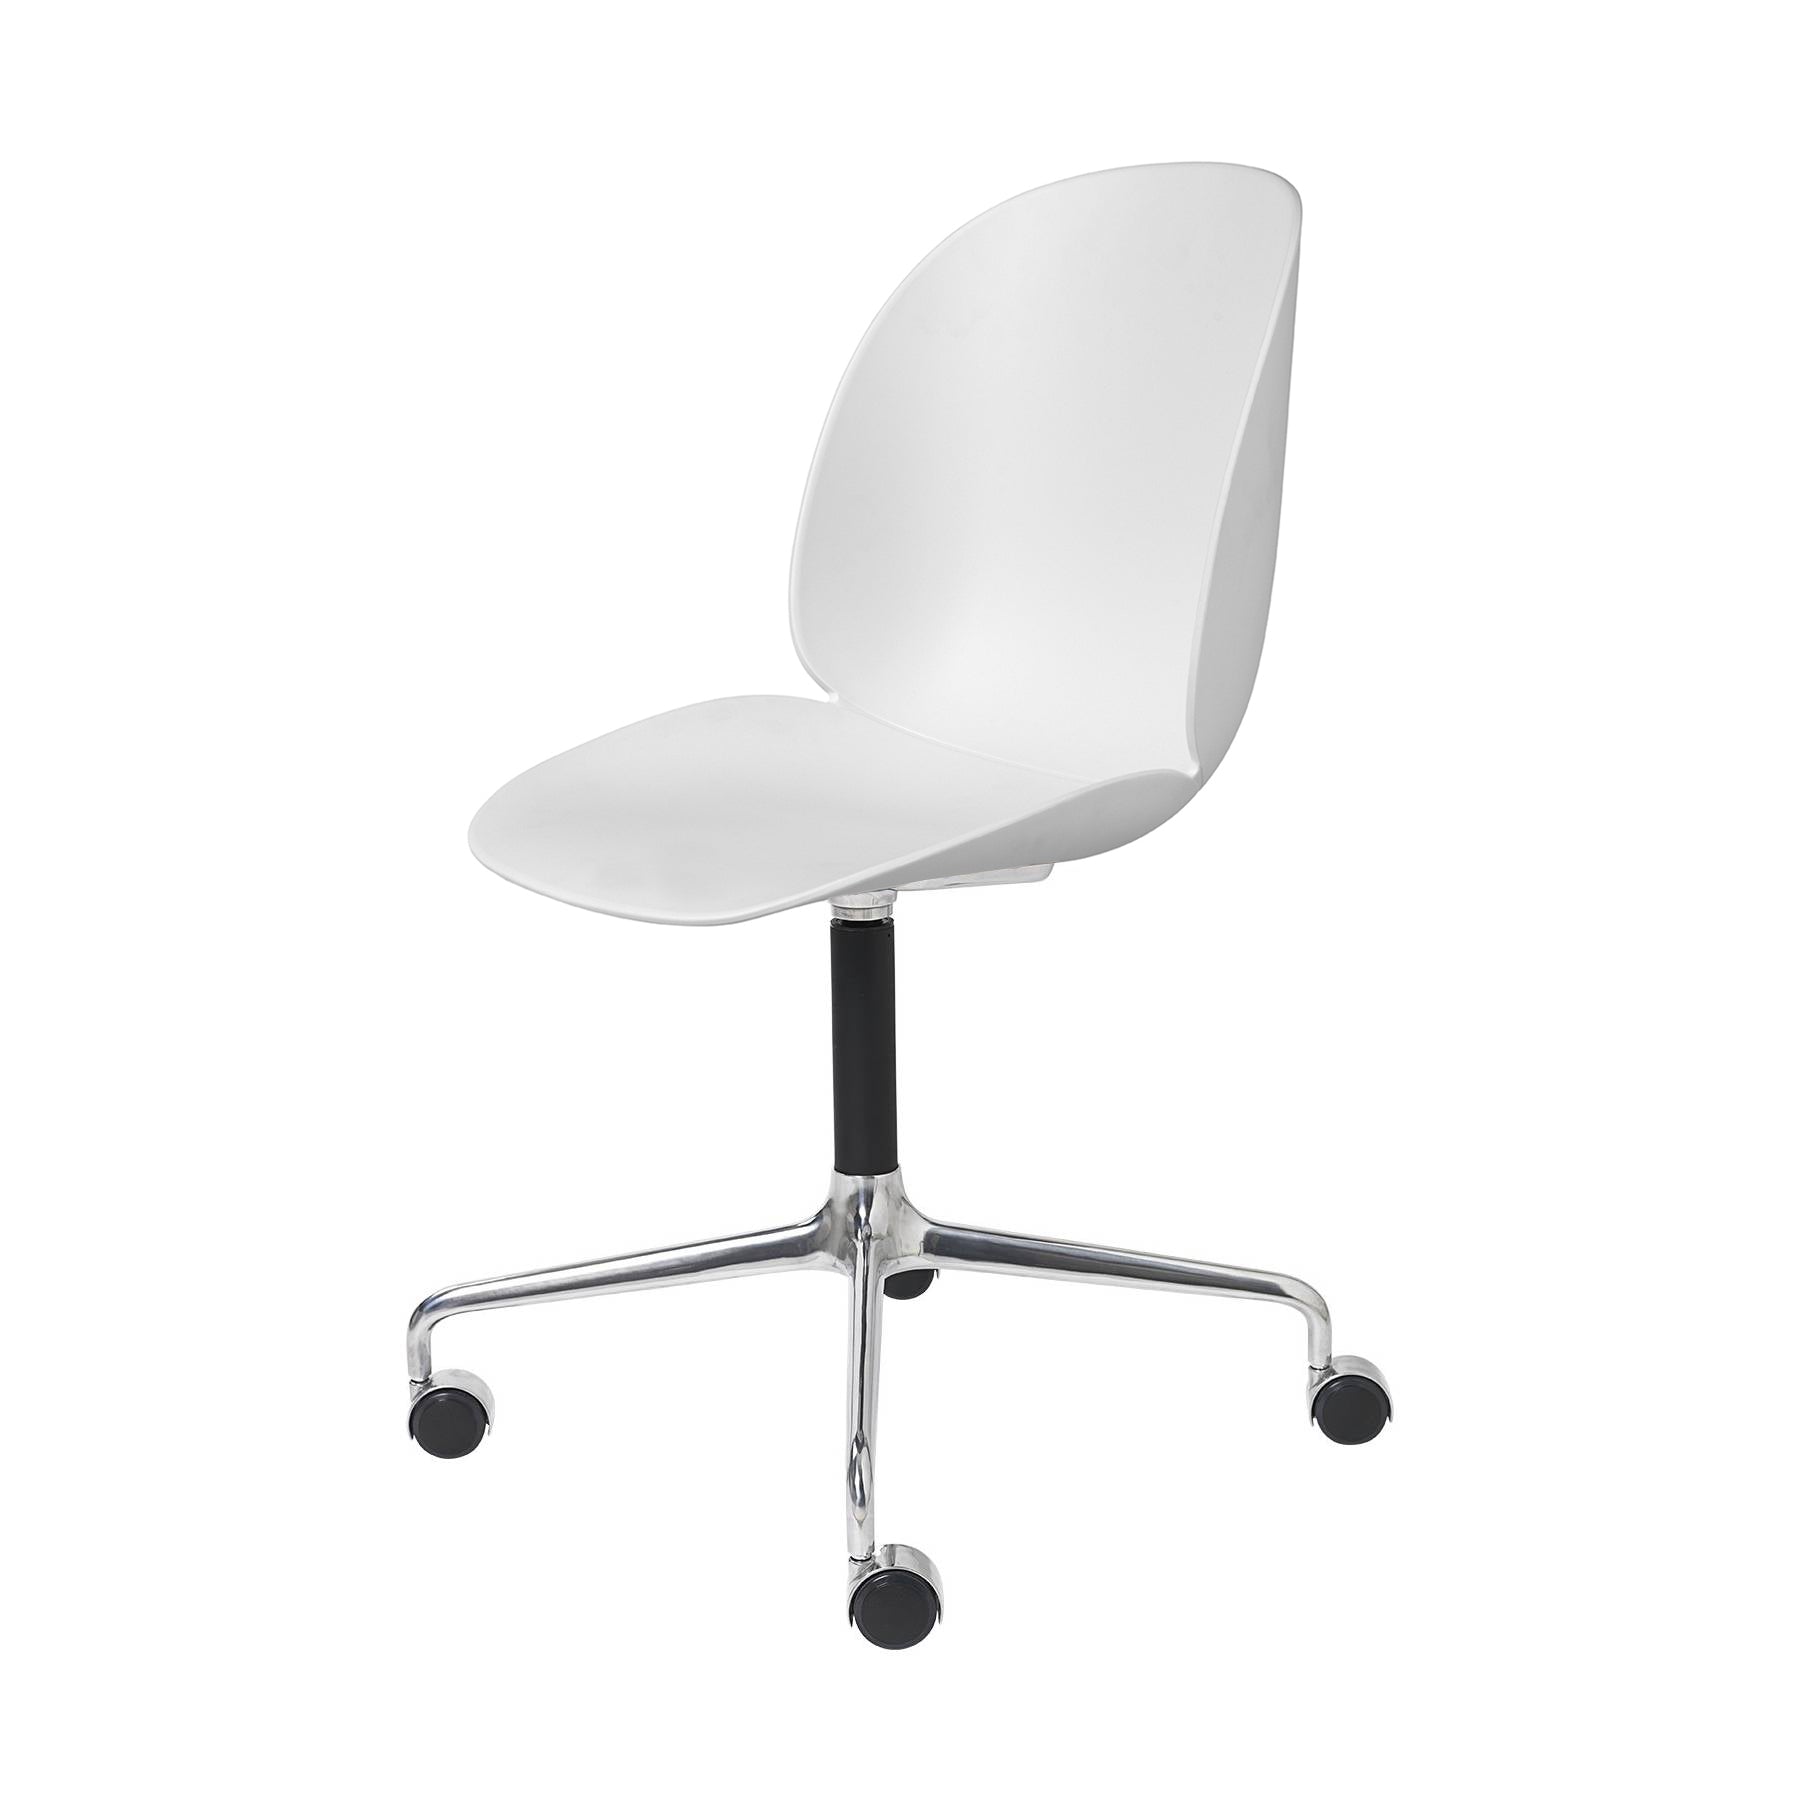 Beetle Meeting Chair: 4-Star Swivel Base with Castor + Alabaster White + Polished Aluminum + Black Matt